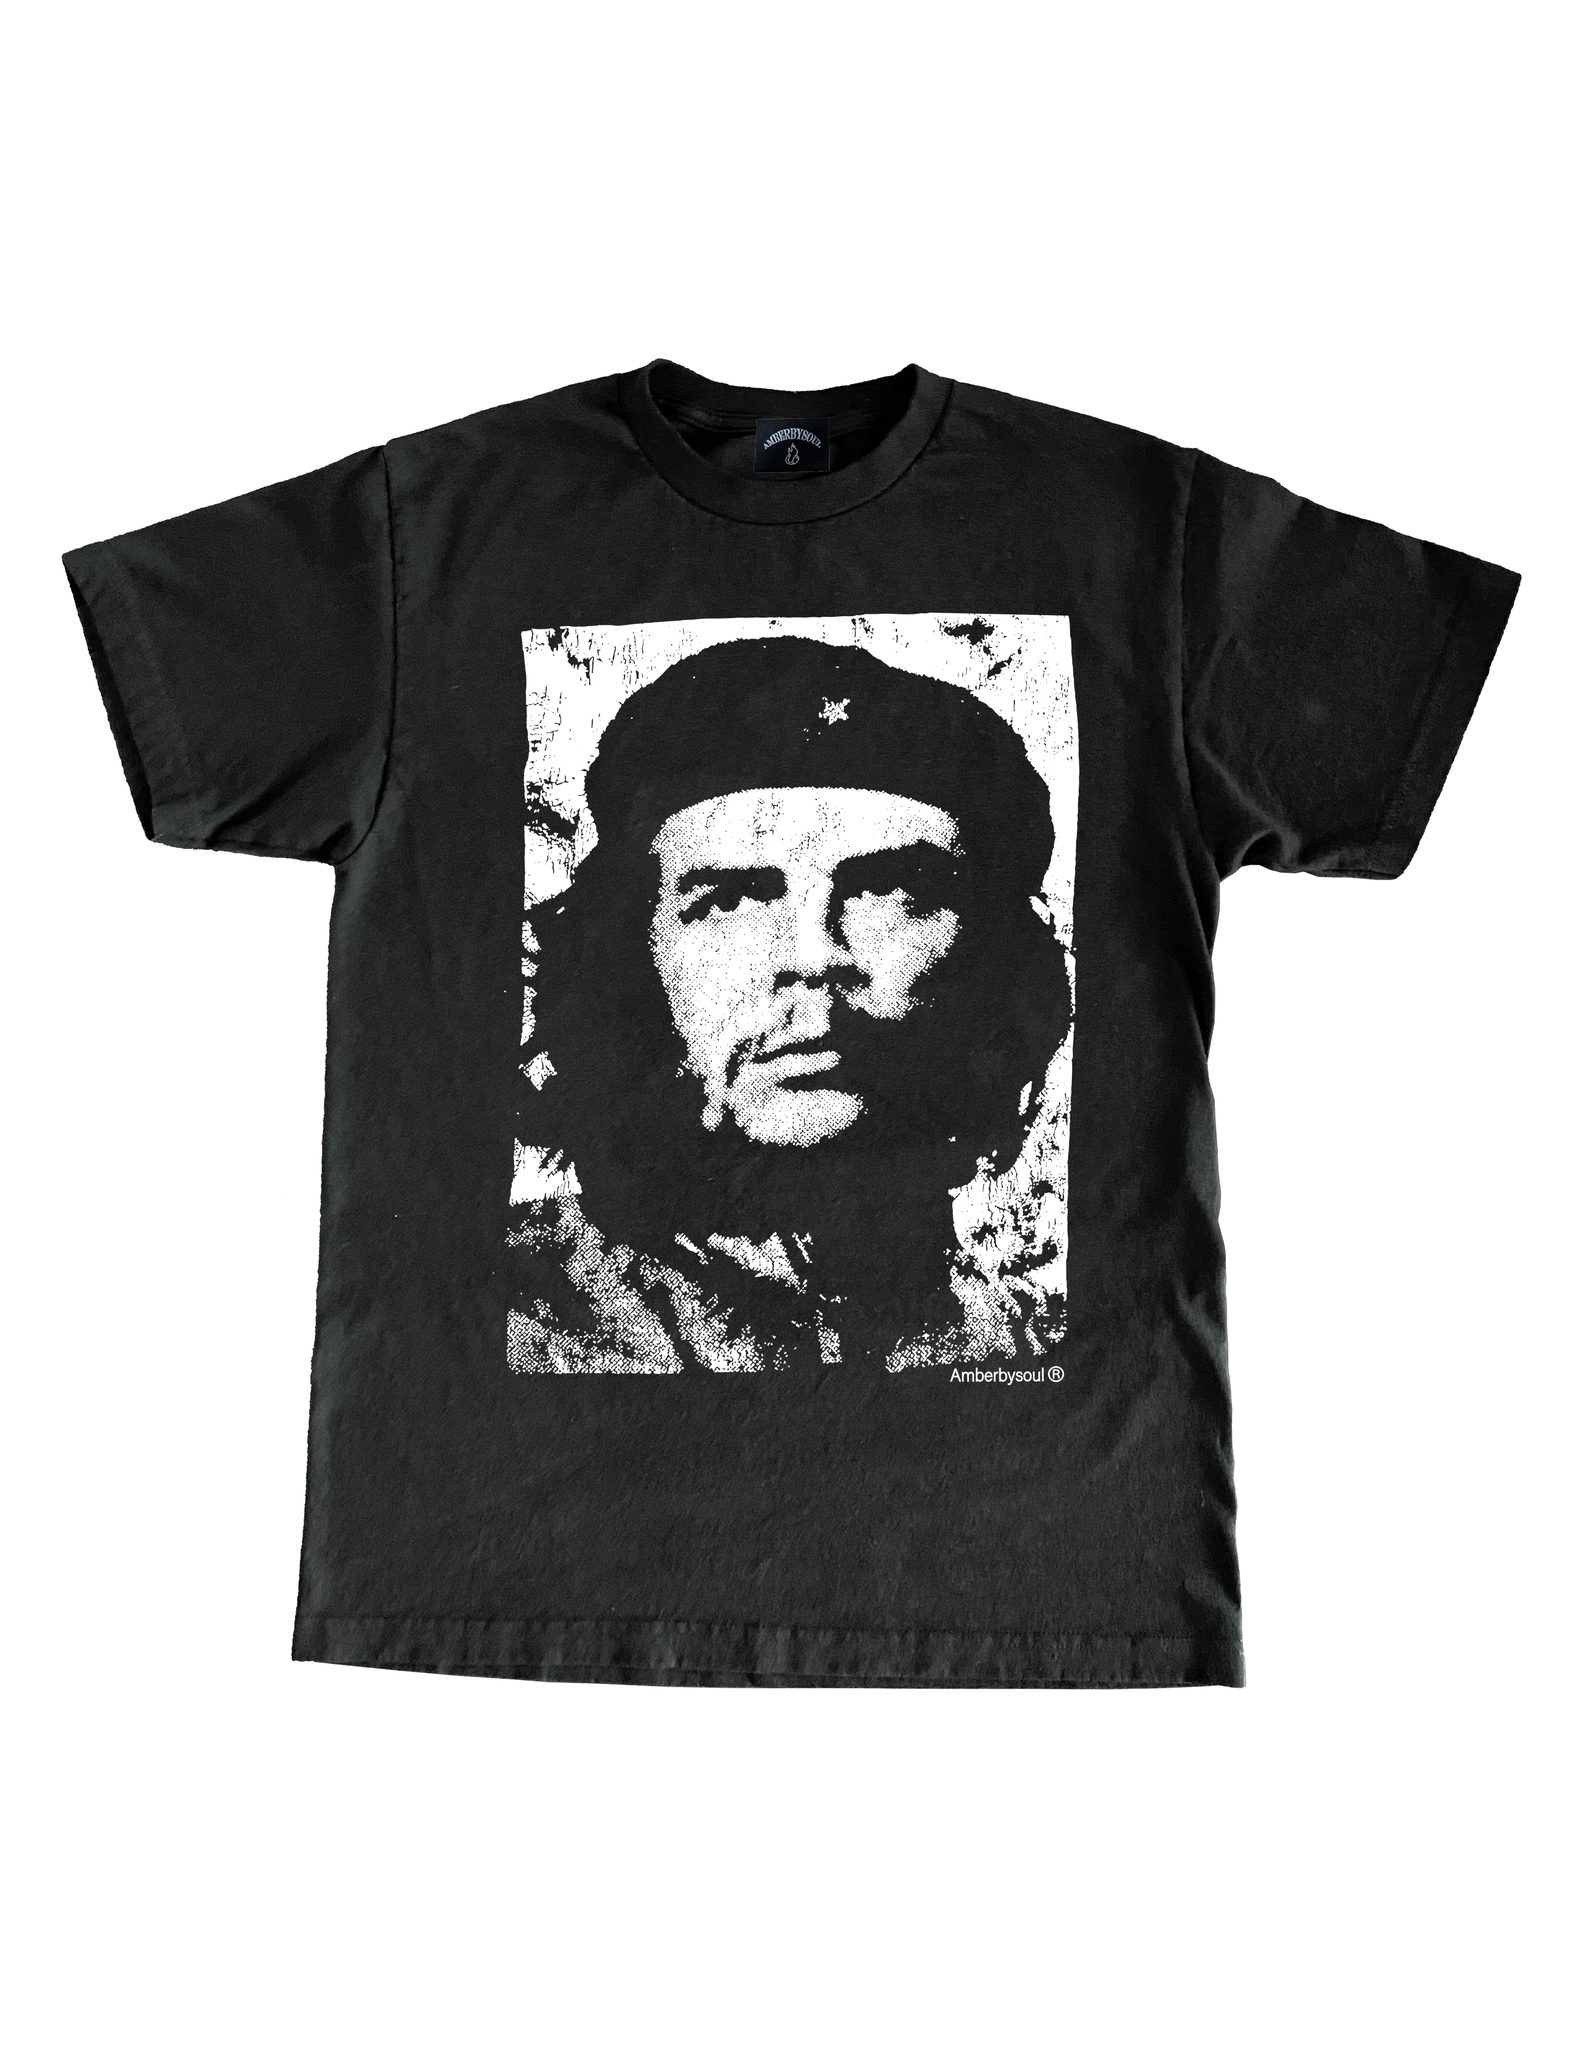 Che Guevara T-shirt